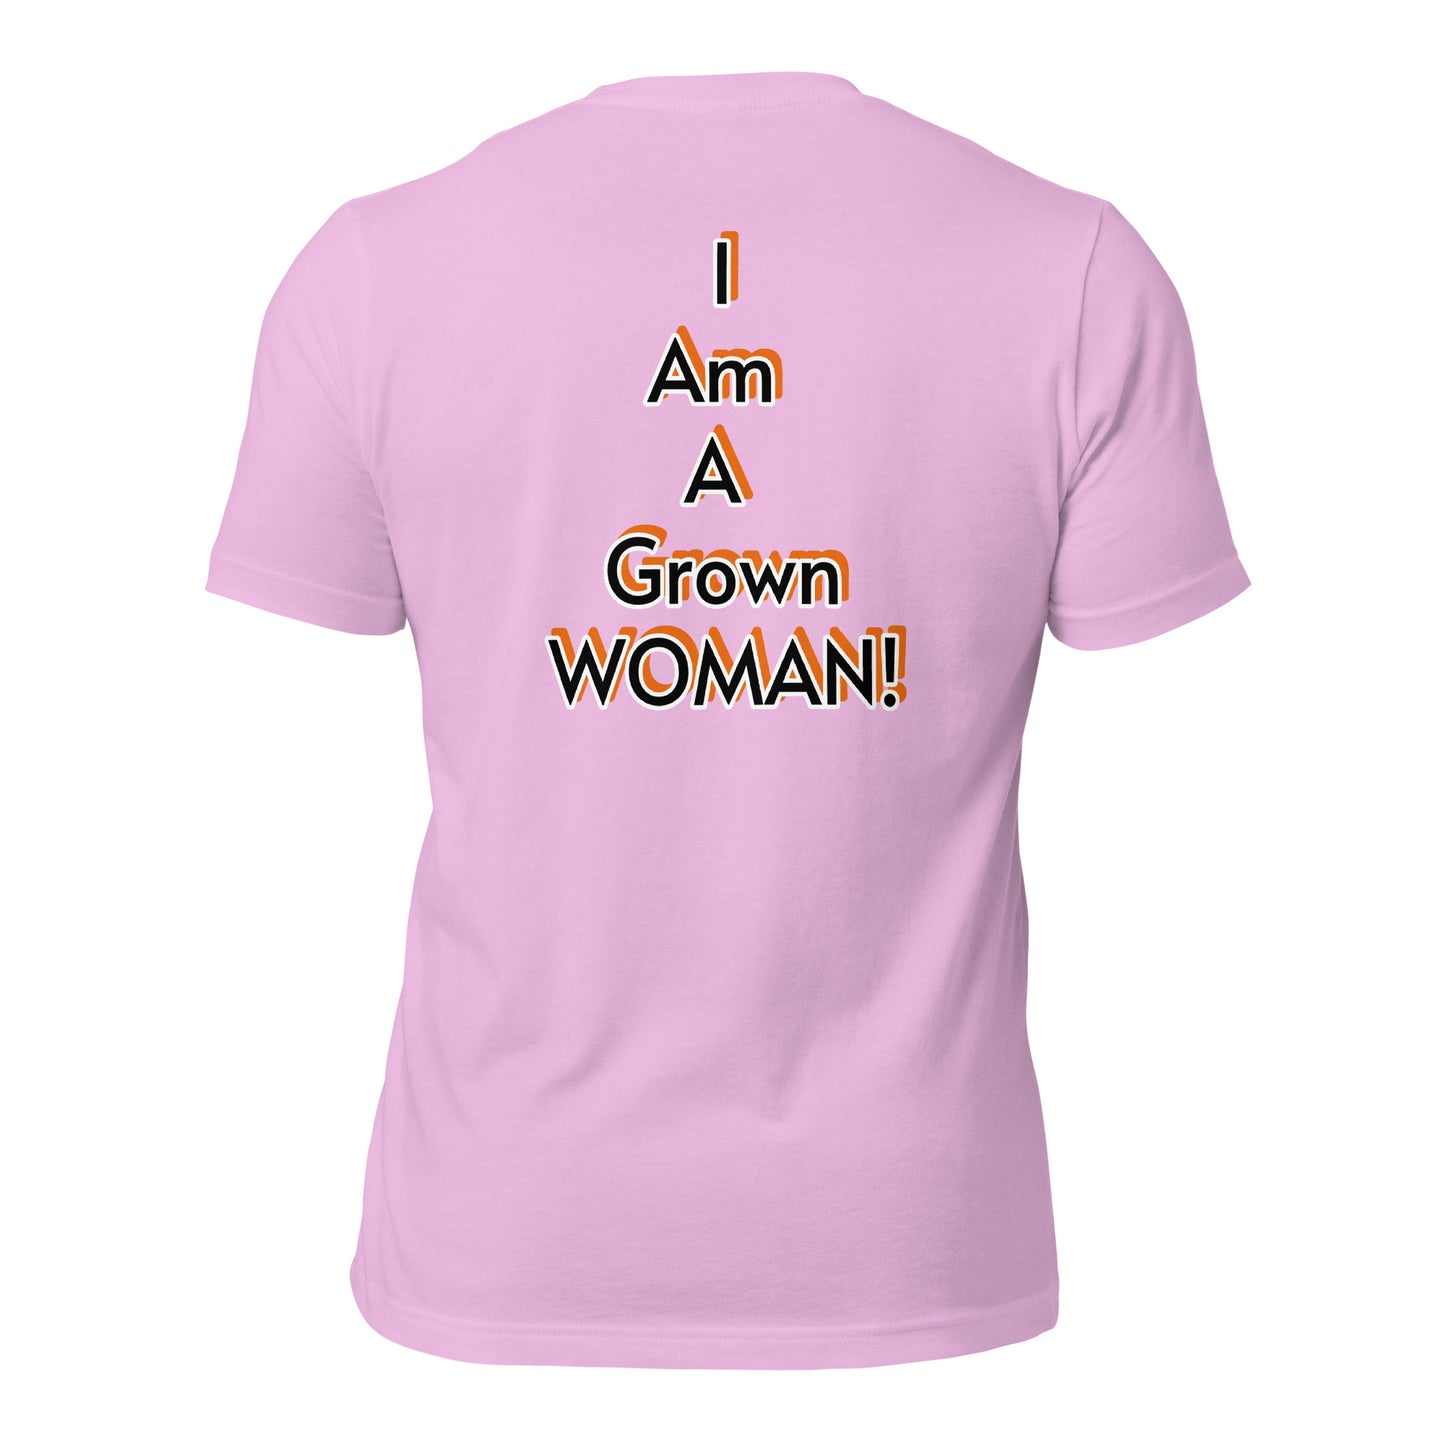 Grown Woman CUSTOM MADE